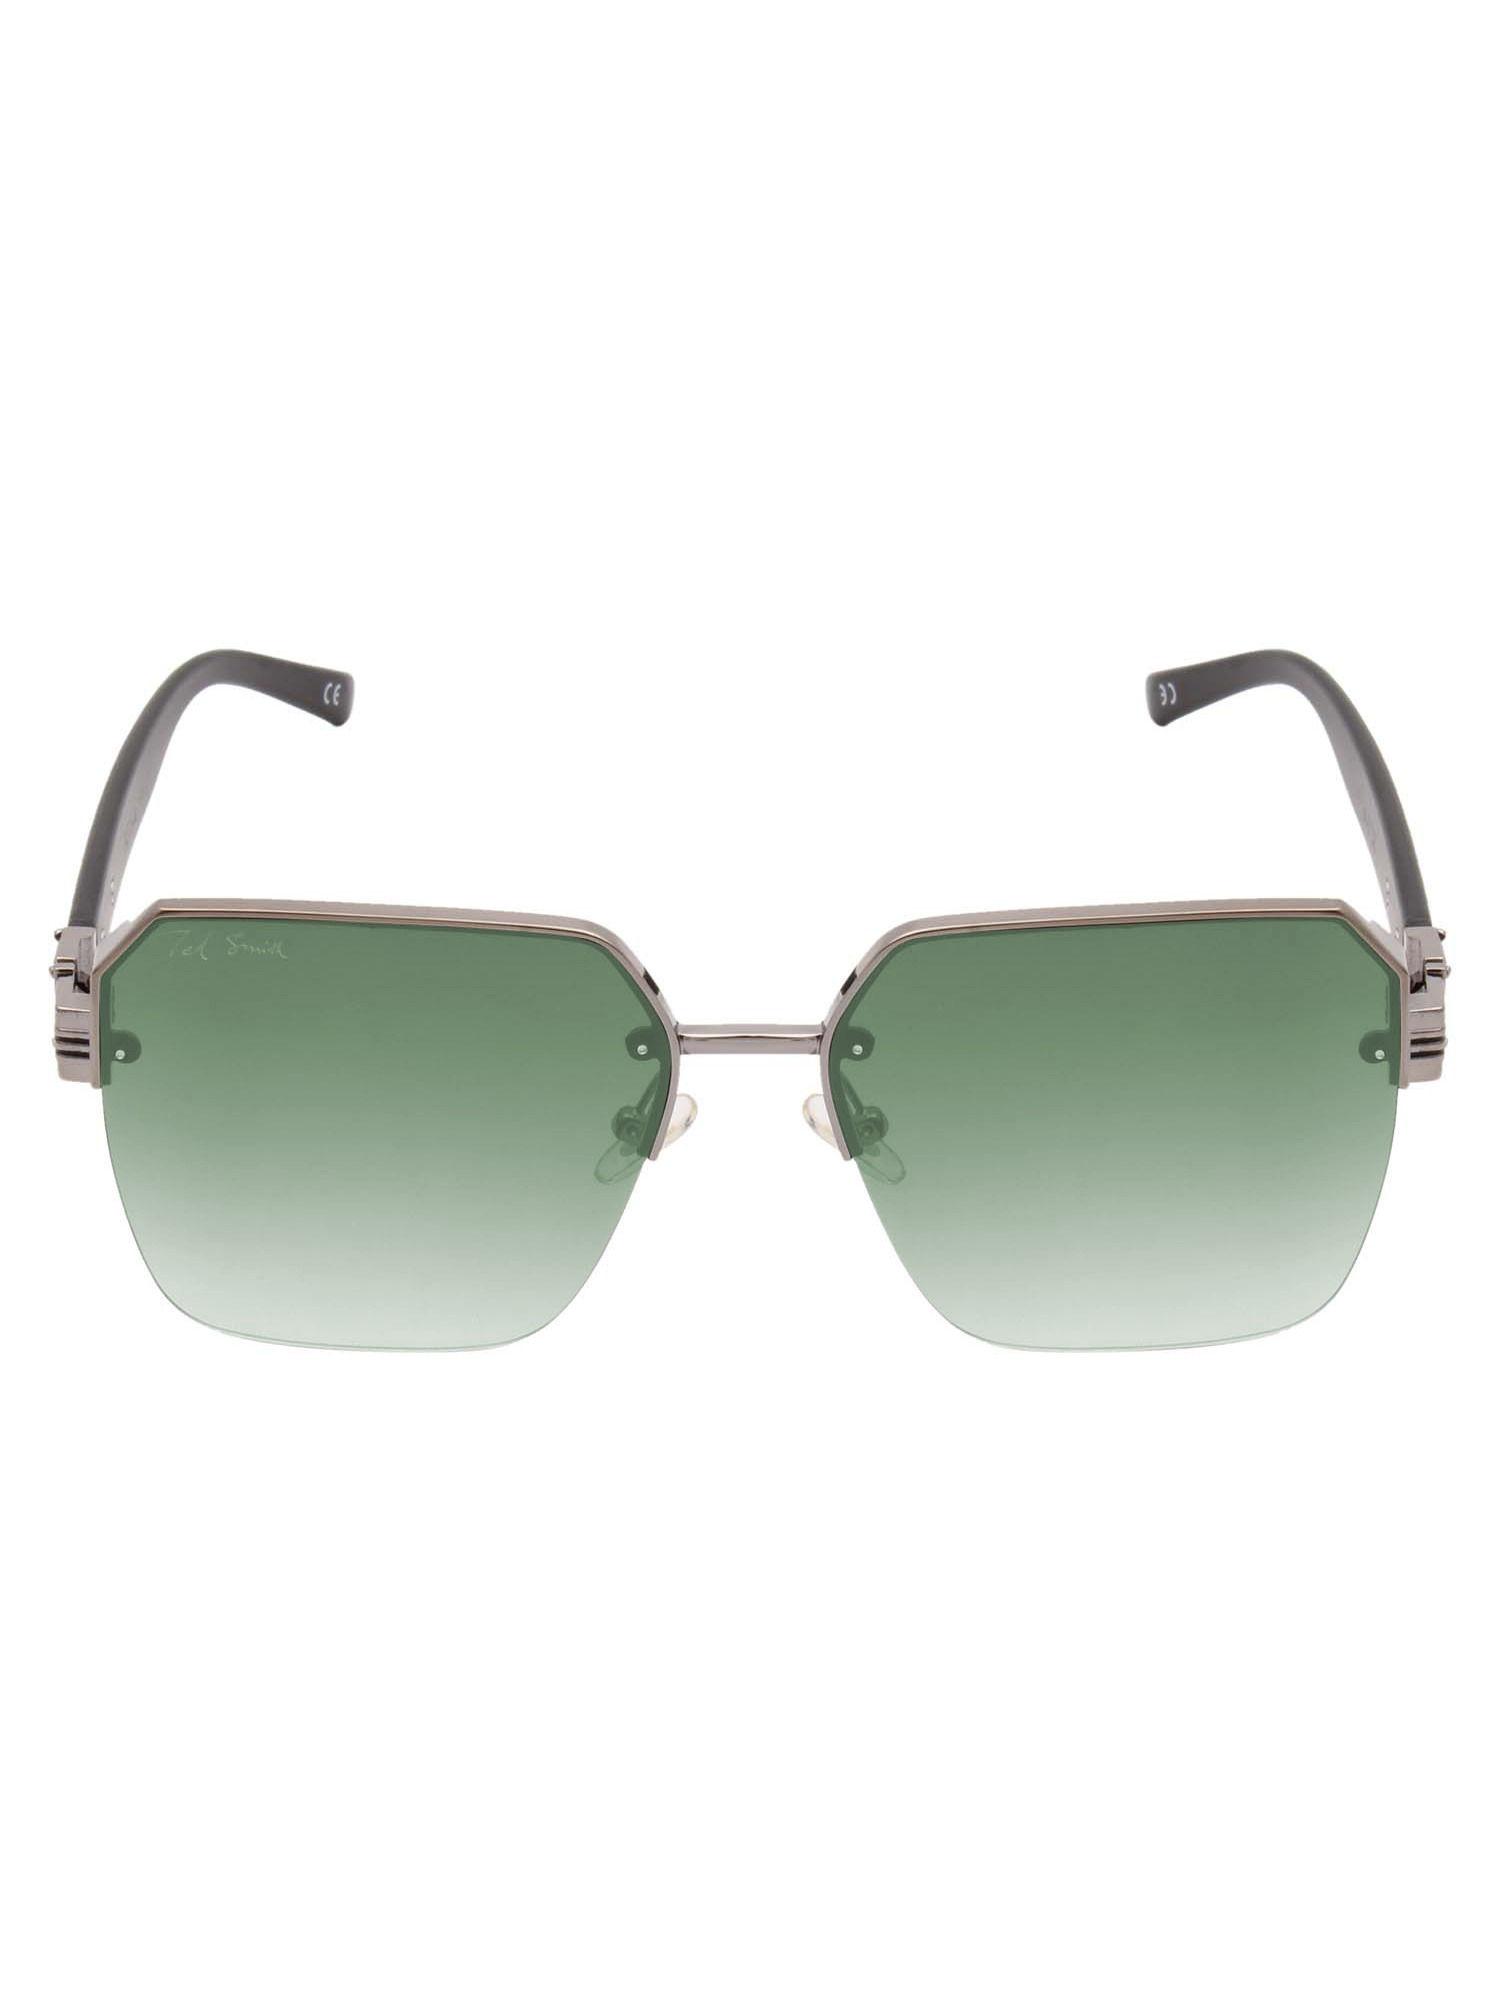 square sunglasses in grey frame carma for men & women